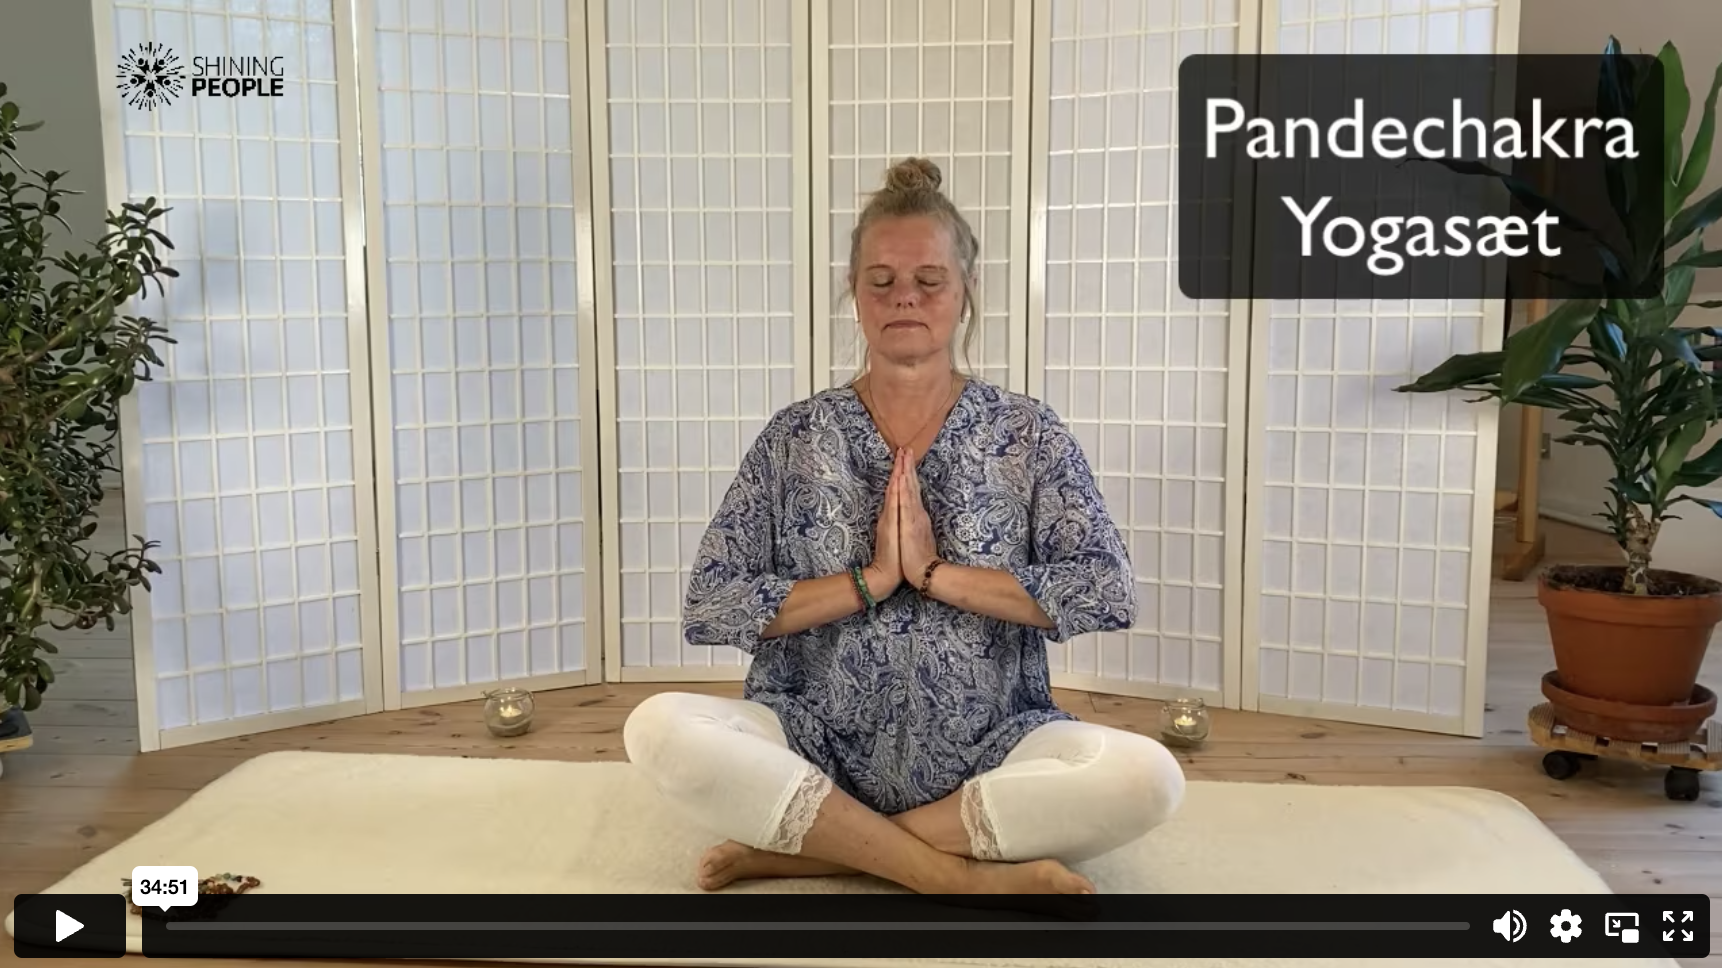 Pandechakra yoga video